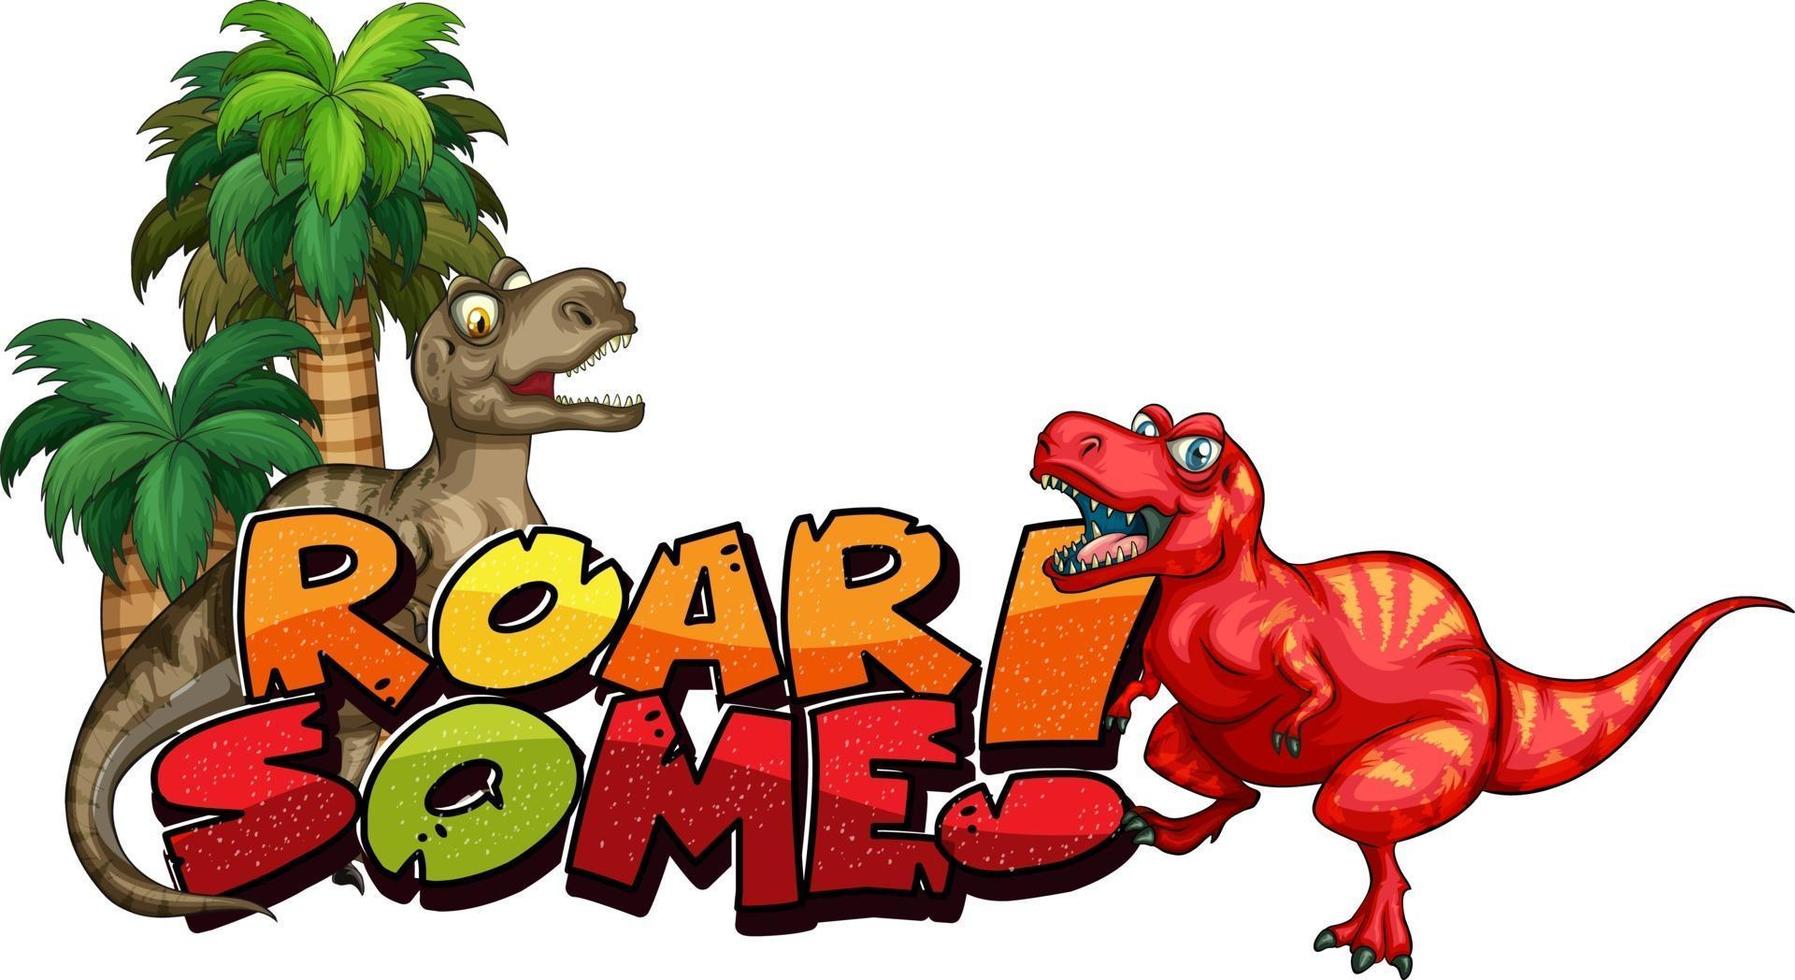 Cute Dinosaurs Cartoon Character With Roar Font Banner 2687325 Vector Art At Vecteezy